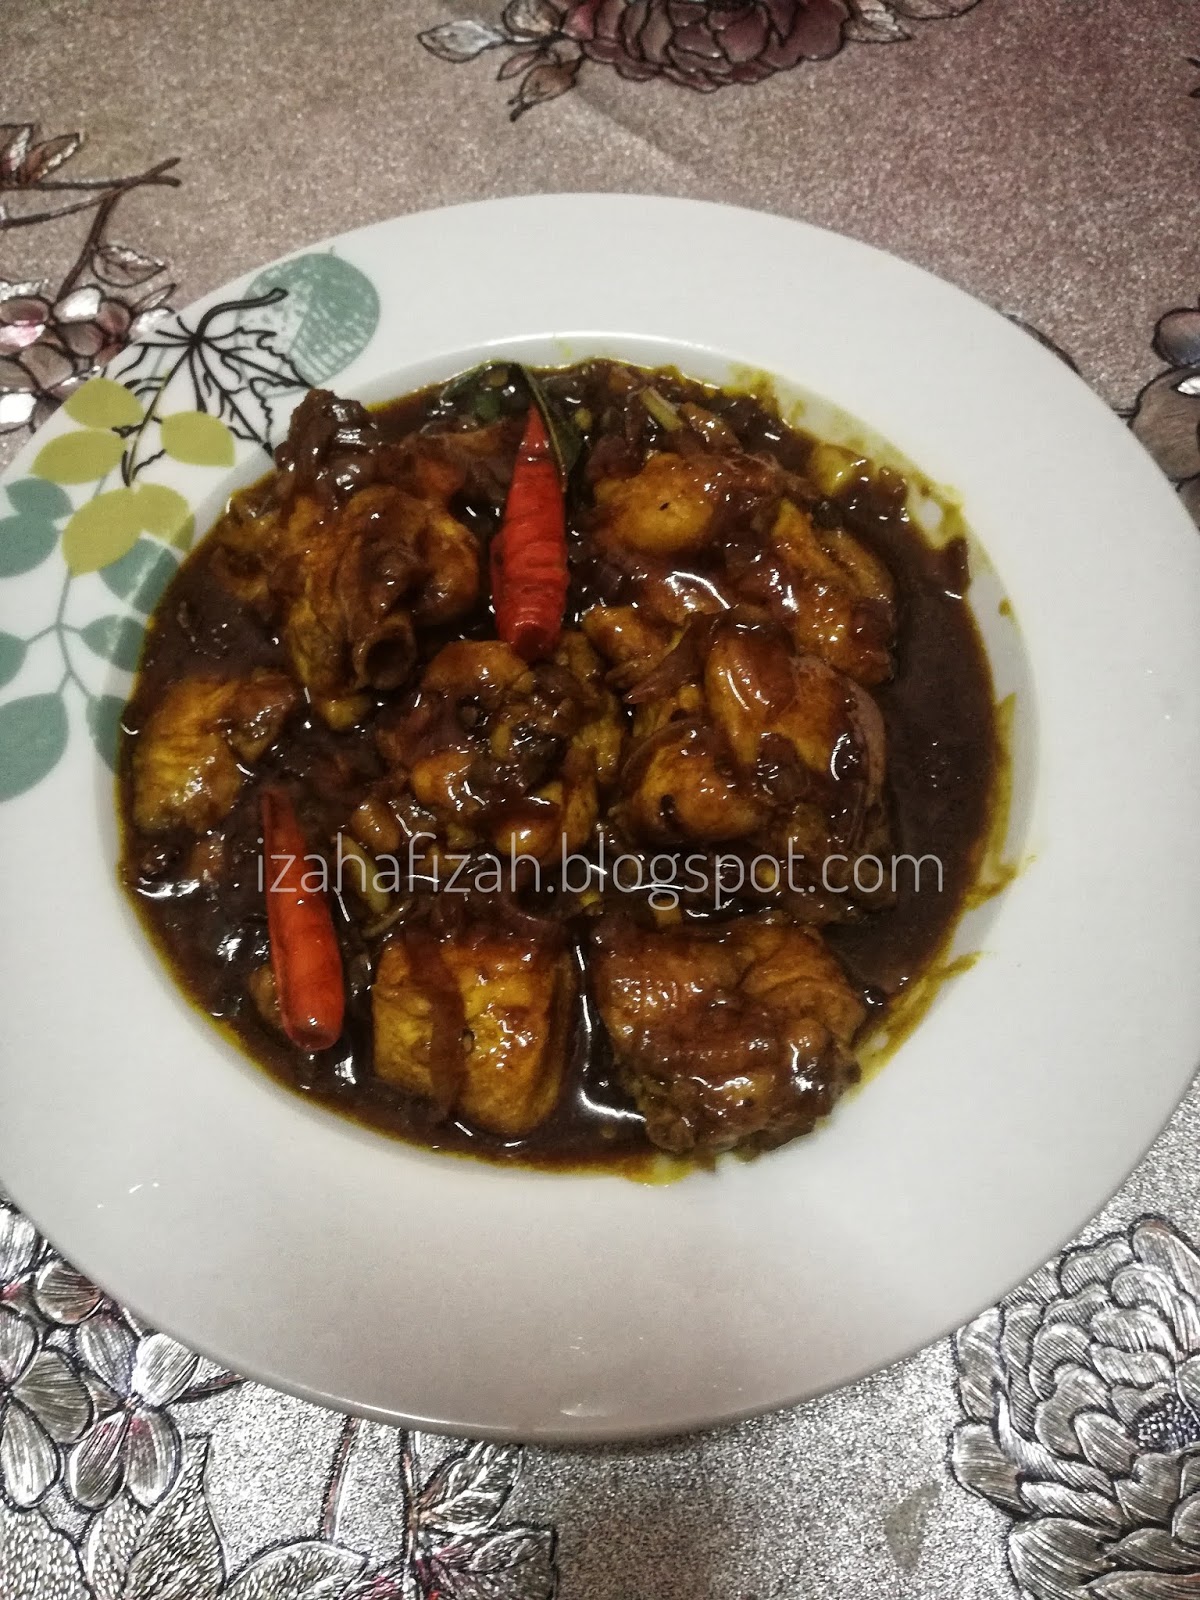 Izahafizah.blogspot.com: Resepi Ayam Kam Heong yang mudah 